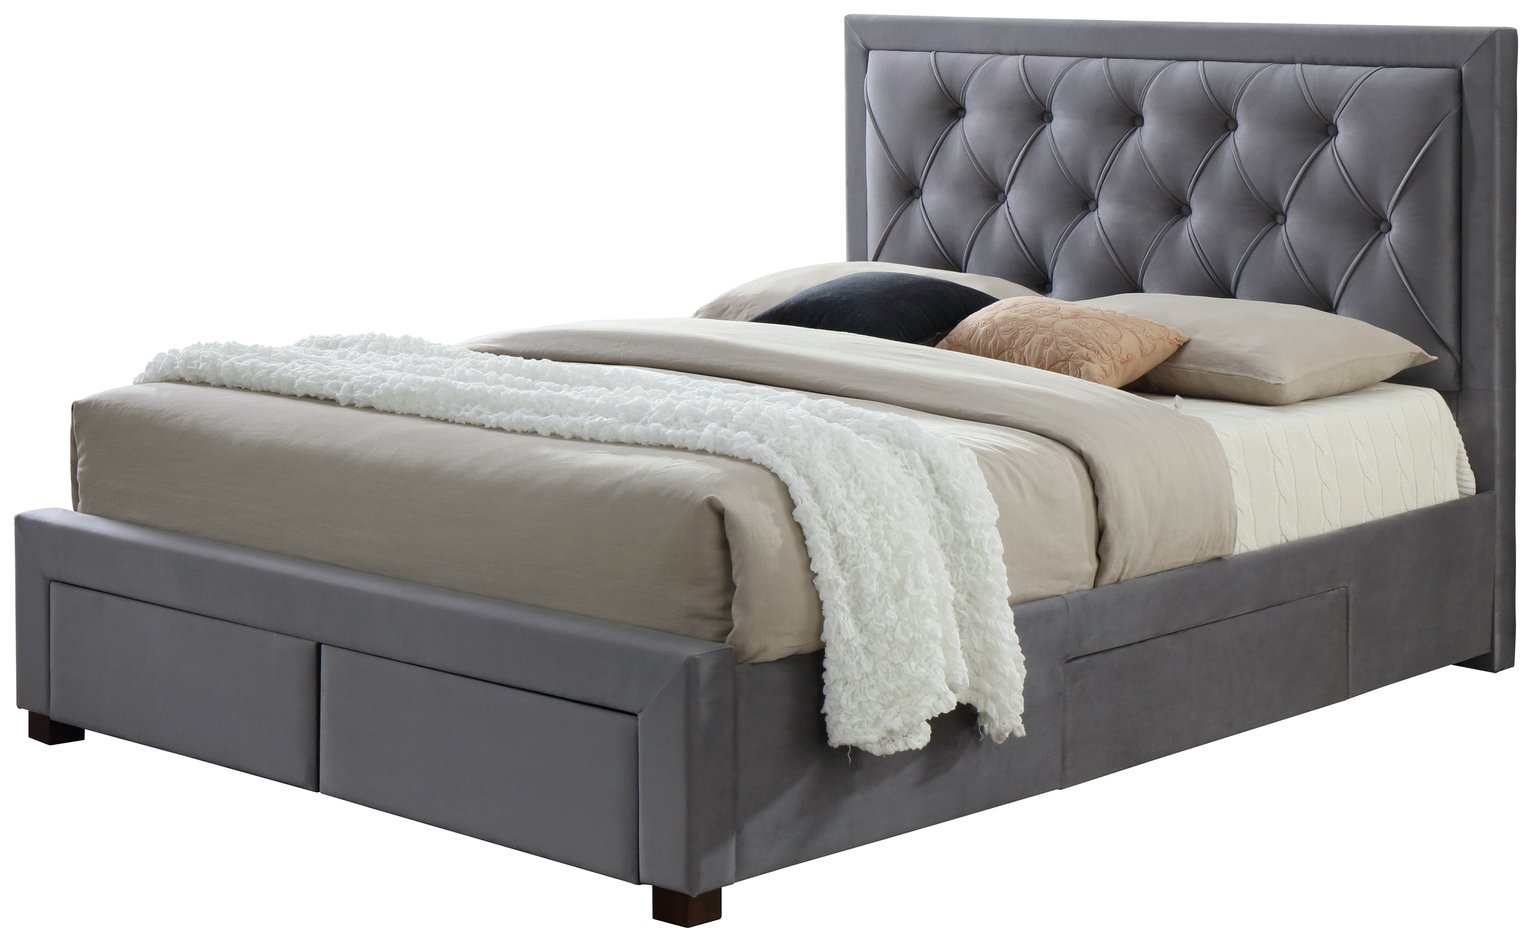 Birlea Woodbury Grey Kingsize Bed Frame at Argos review